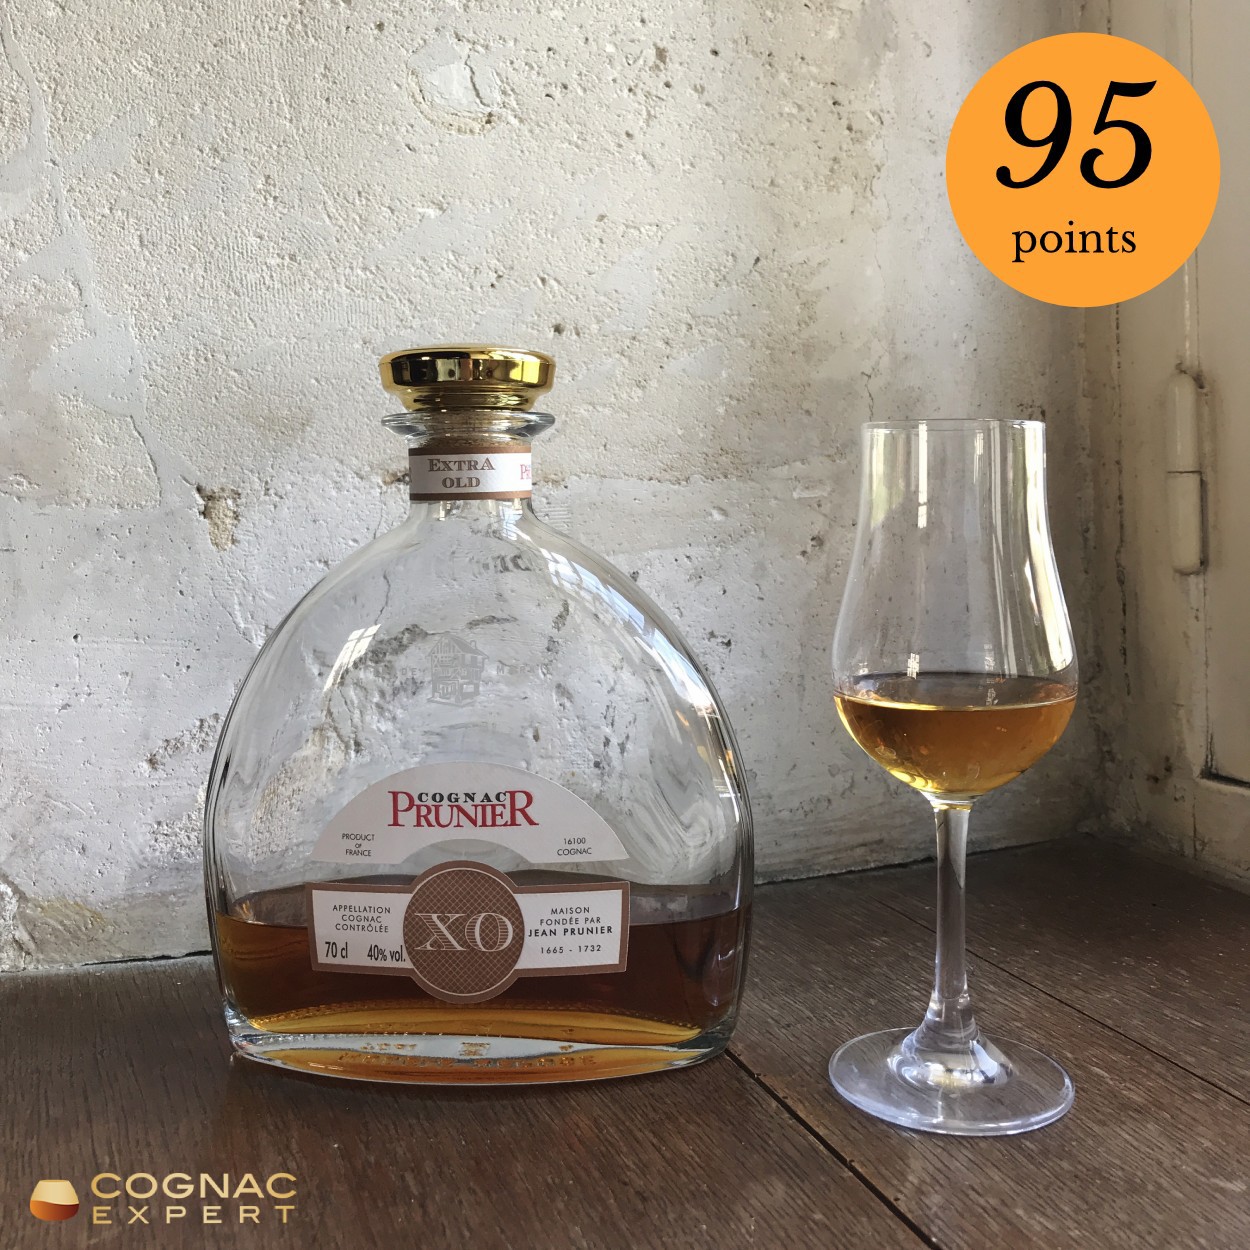 Prunier XO Cognac bottle and glass